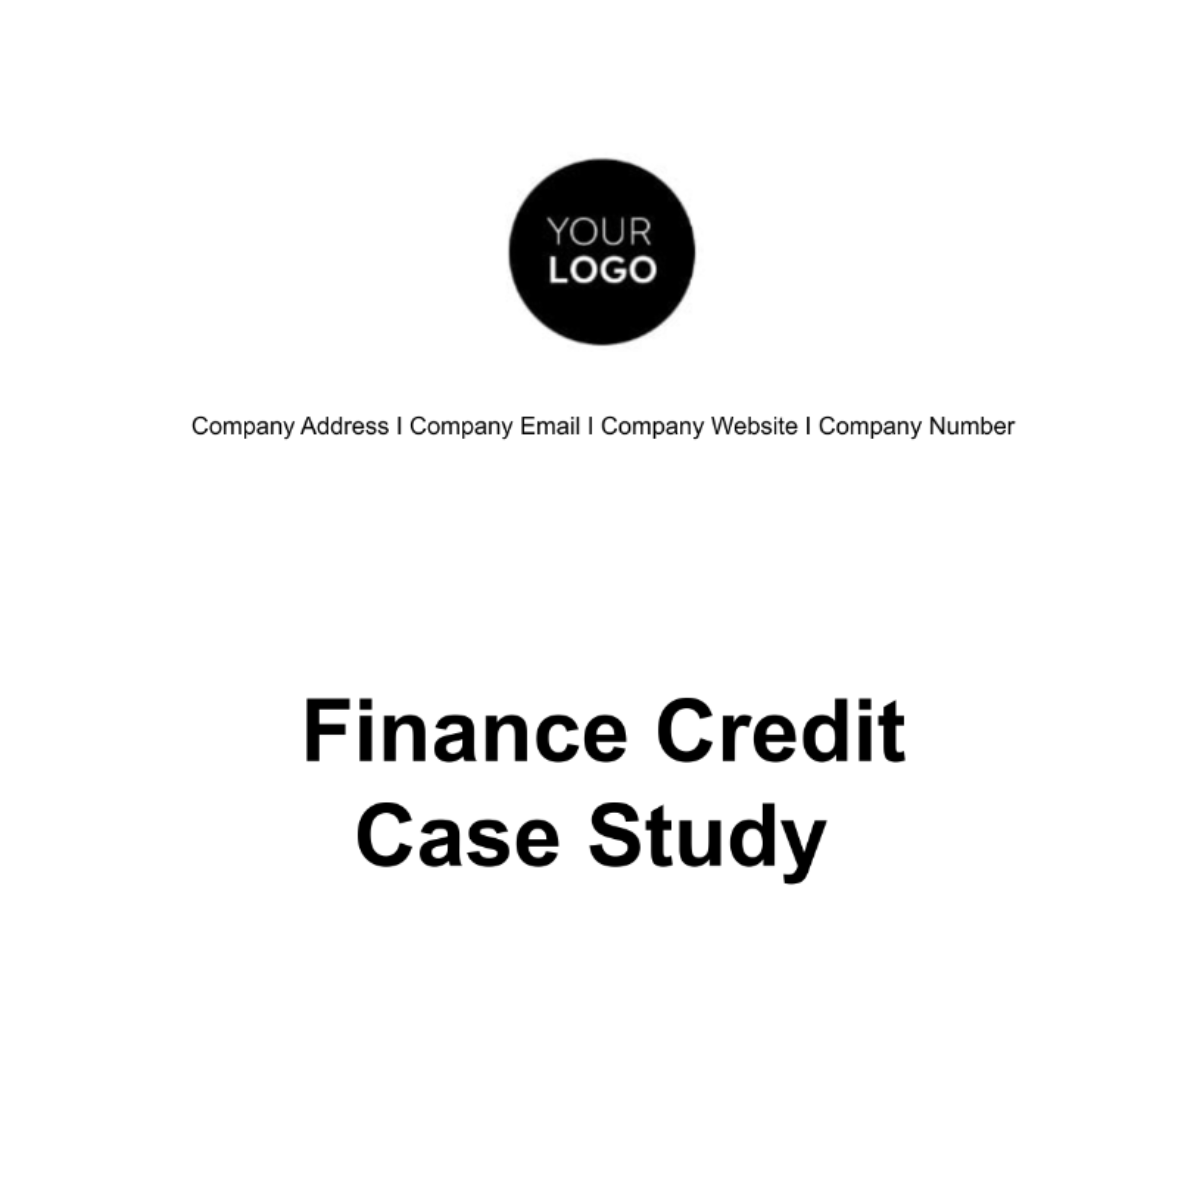 Finance Credit Case Study Template